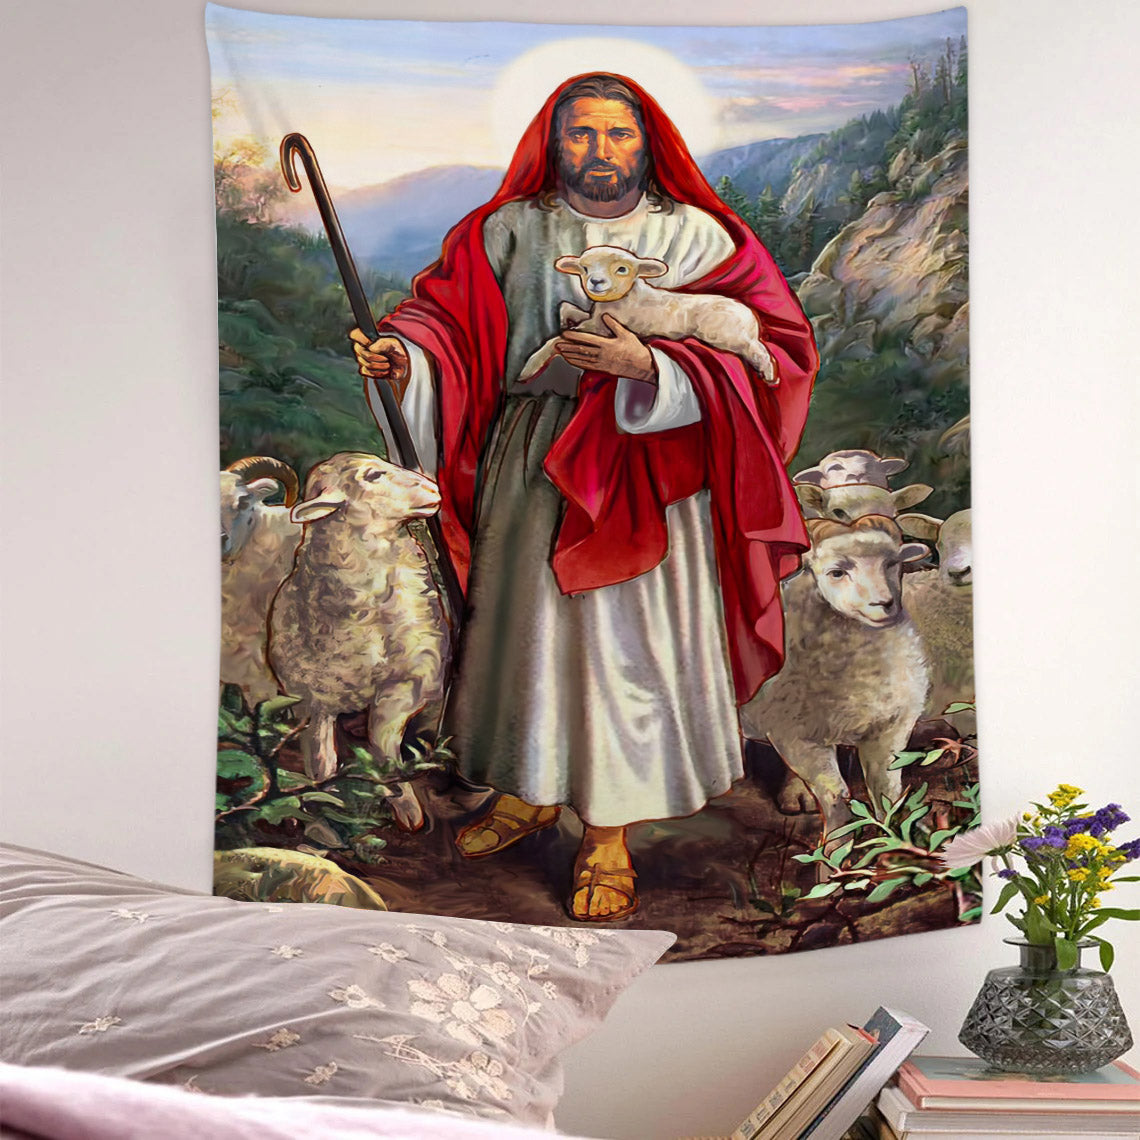 Jesus The Good Shepherd Tapestry - Christian Tapestry - Jesus Wall Tapestry - Religious Tapestry Wall Hangings - Bible Verse Tapestry - Ciaocustom